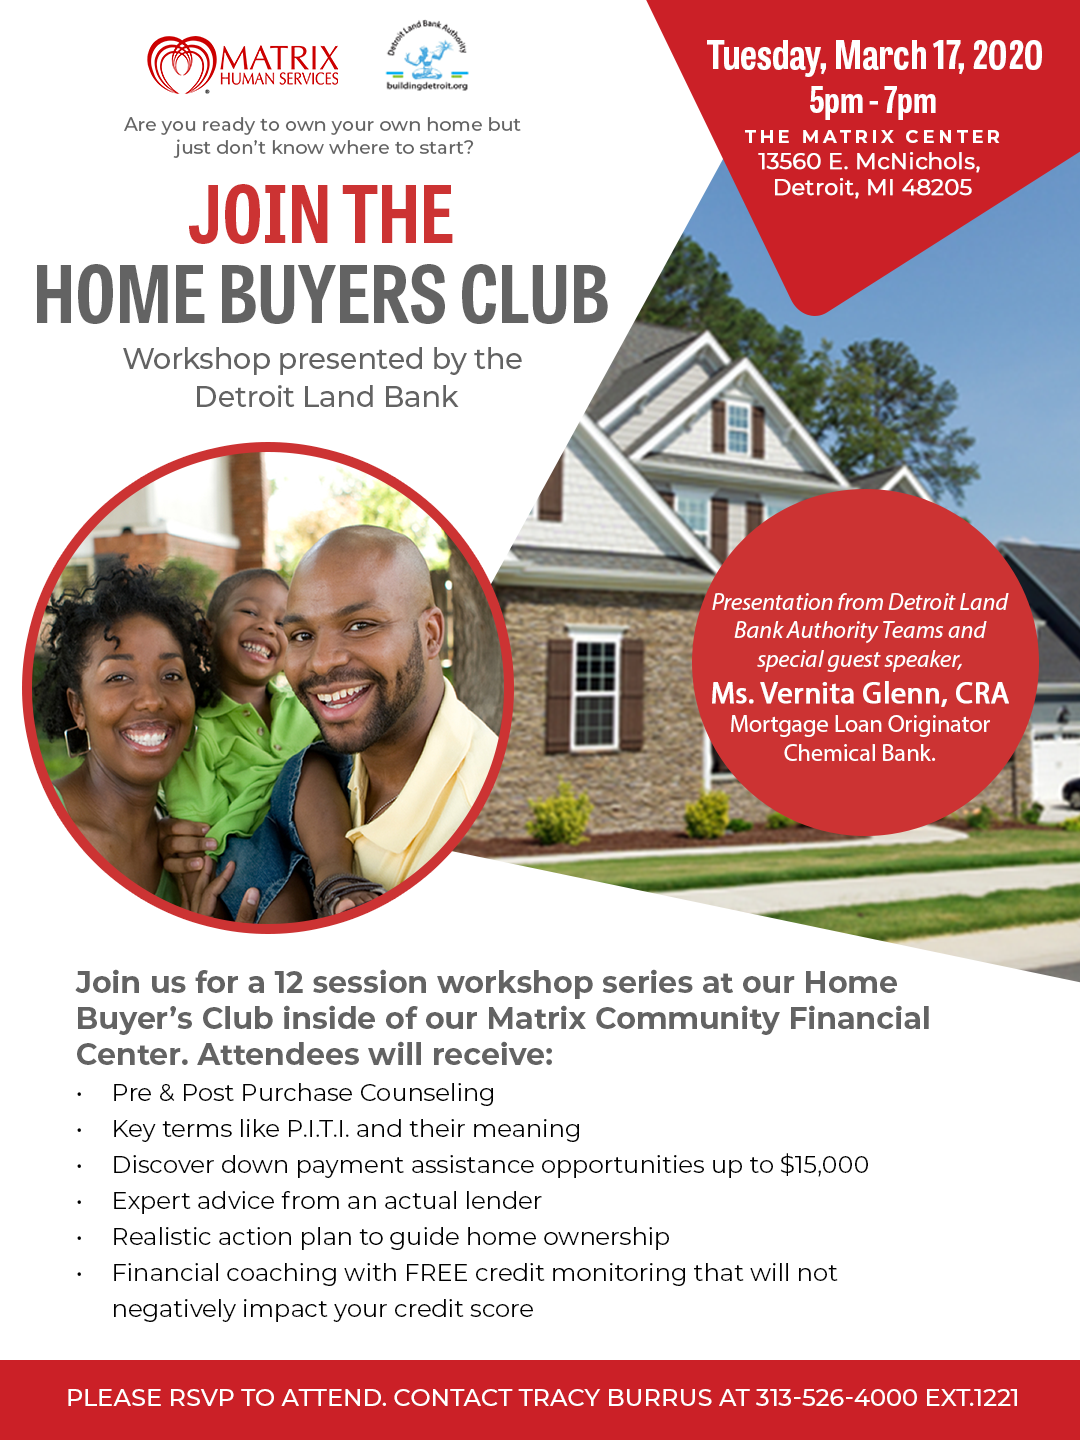 Home Buyer Club flyer